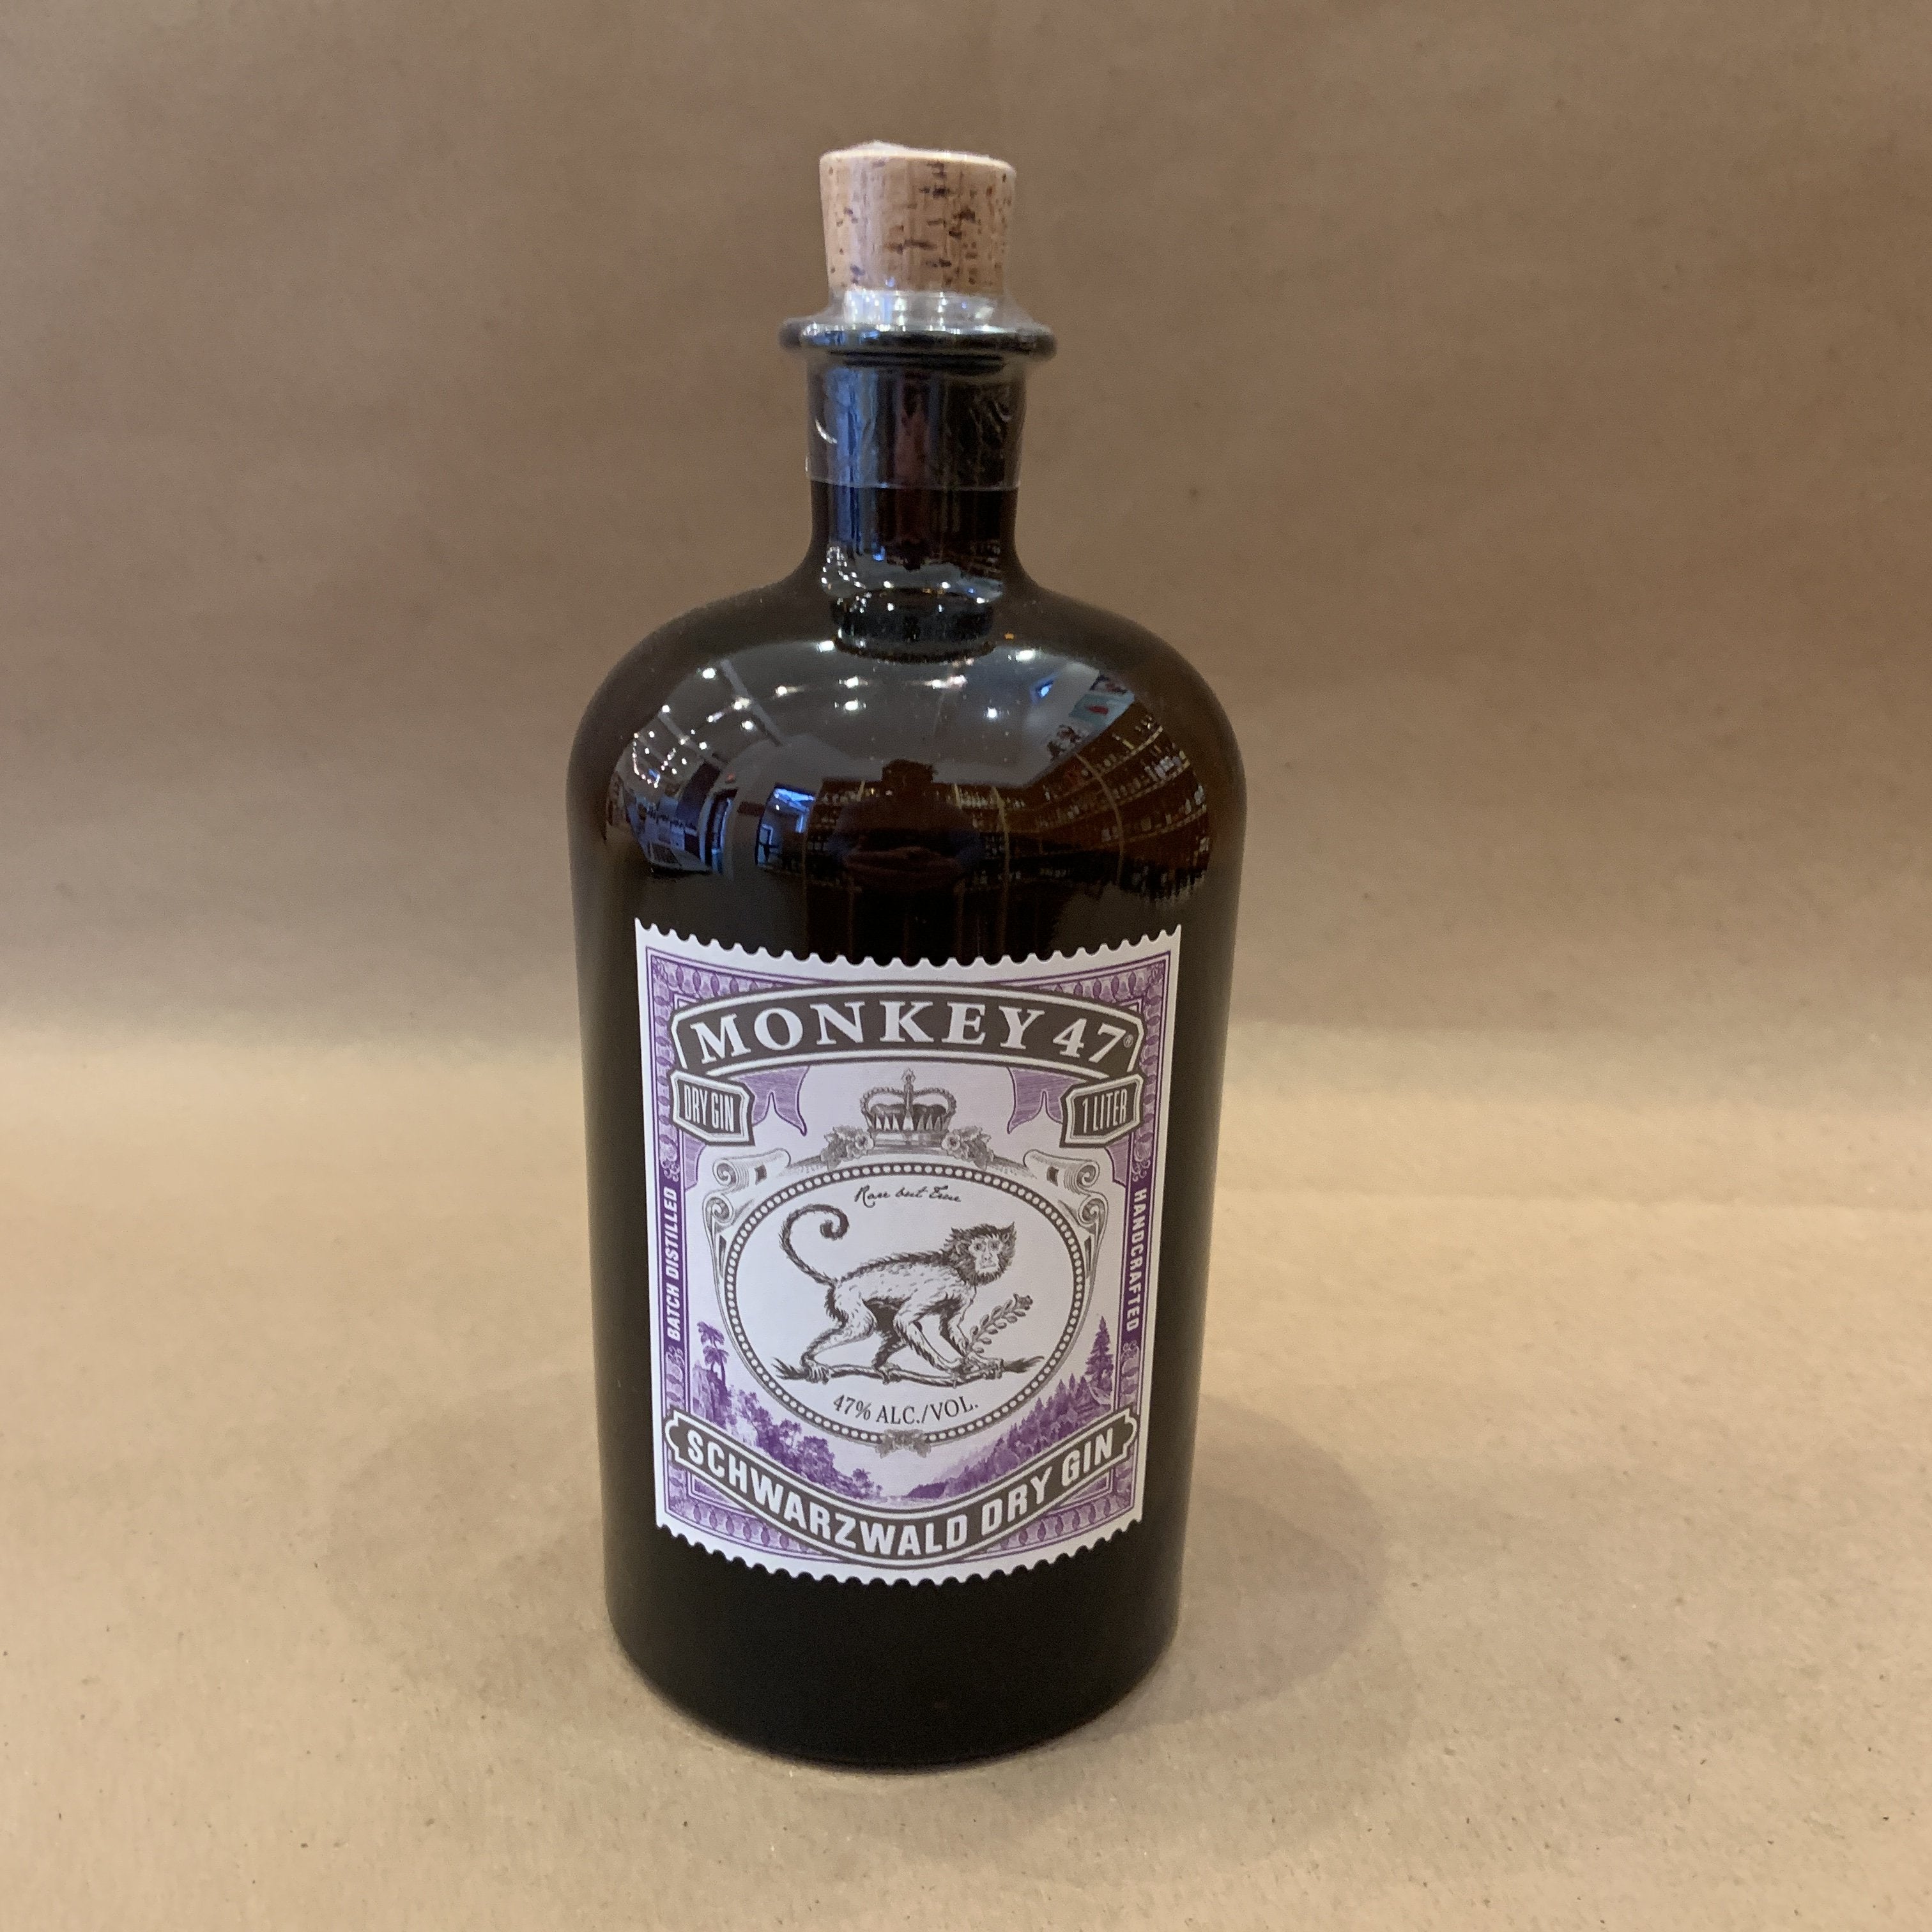 Monkey 47 Schwarzwald Gin 1L – Wainscott Main Wine & Spirits